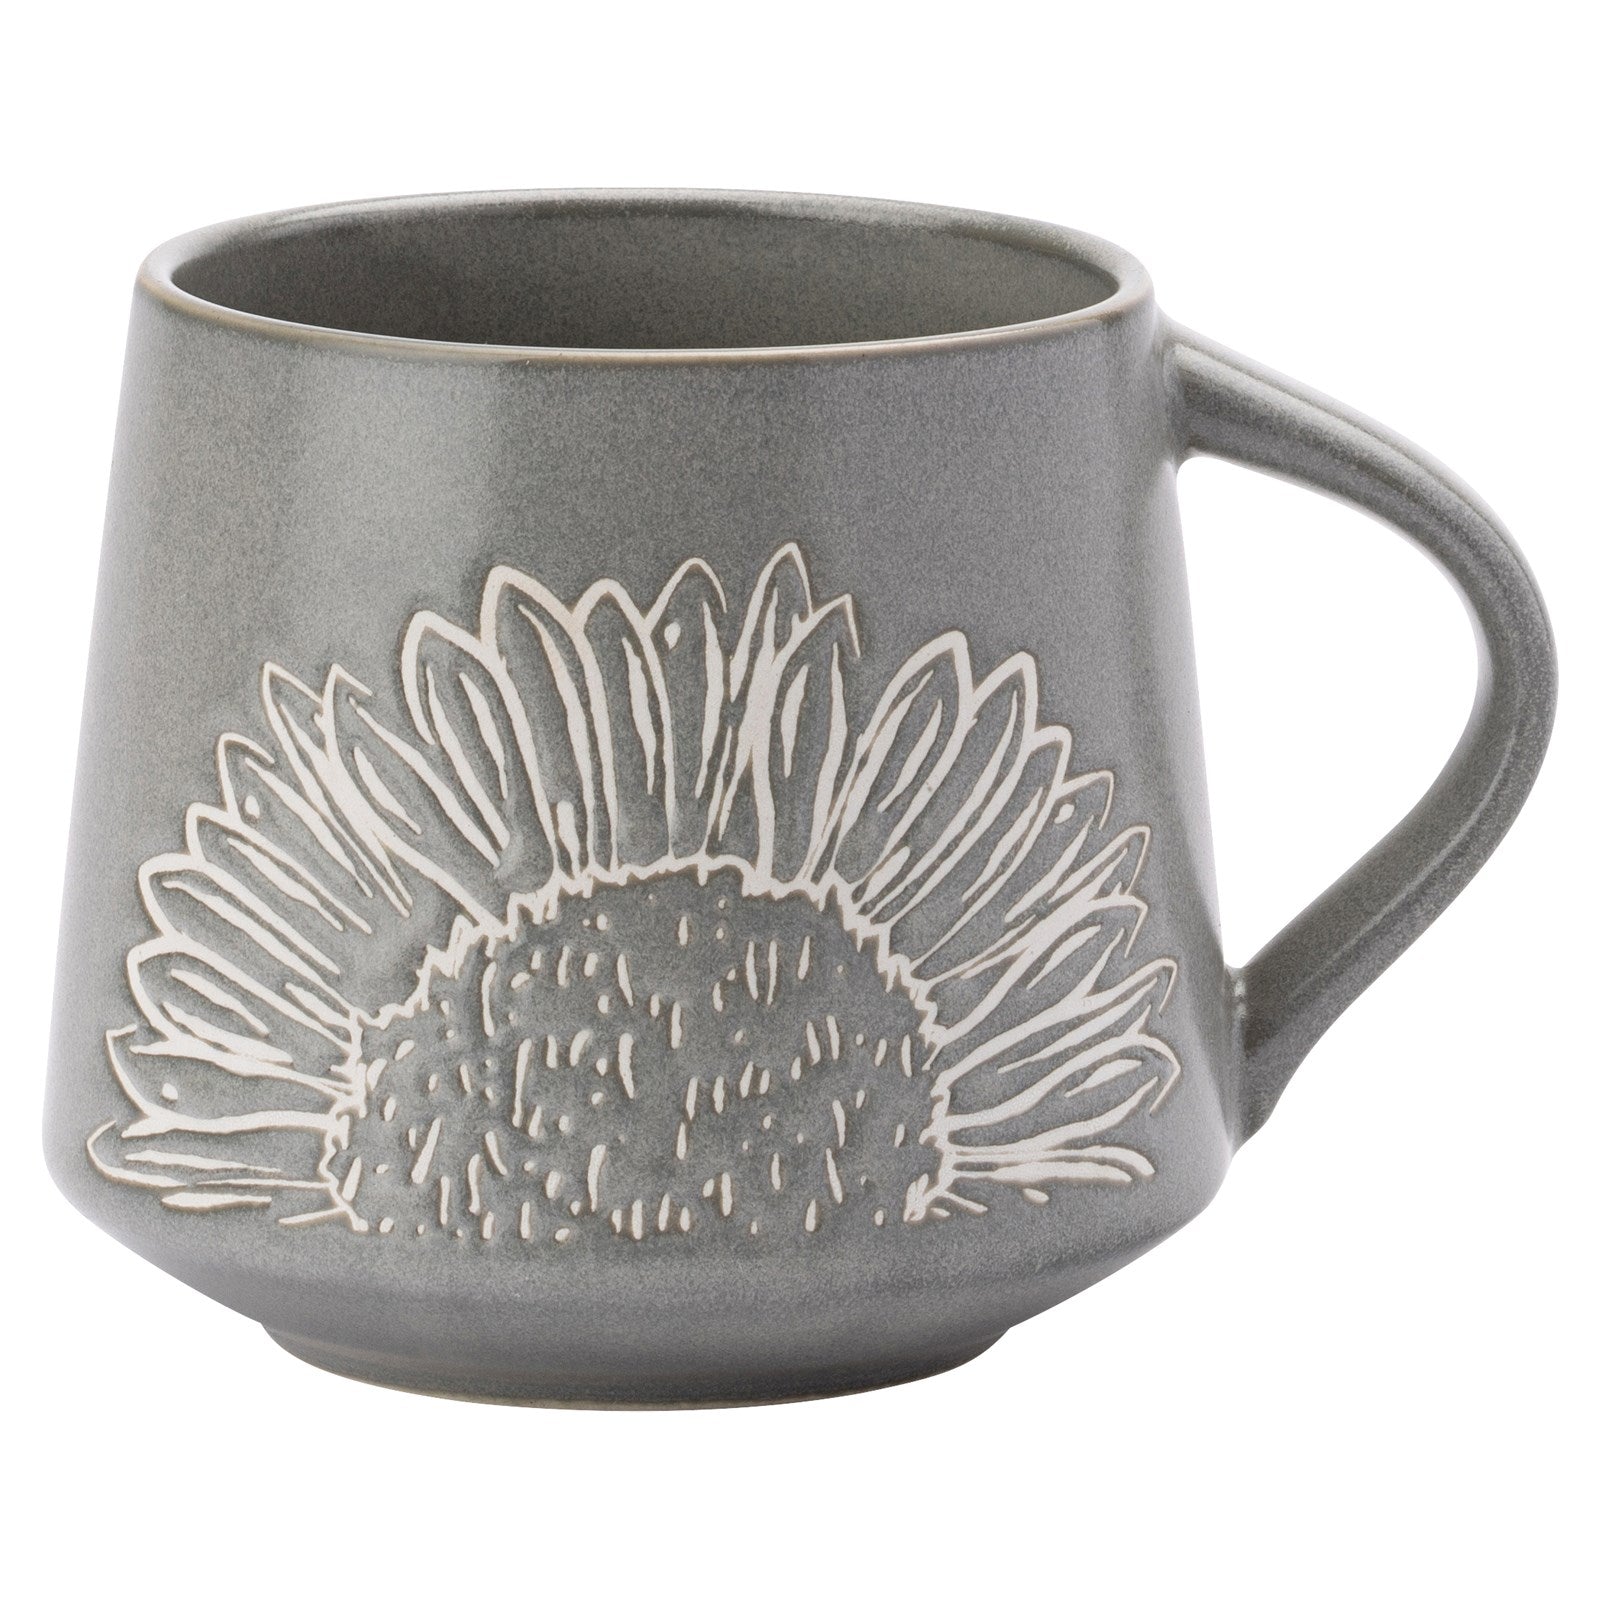 The English Tableware Company Artisan Flower Grey Wax Resist Mug